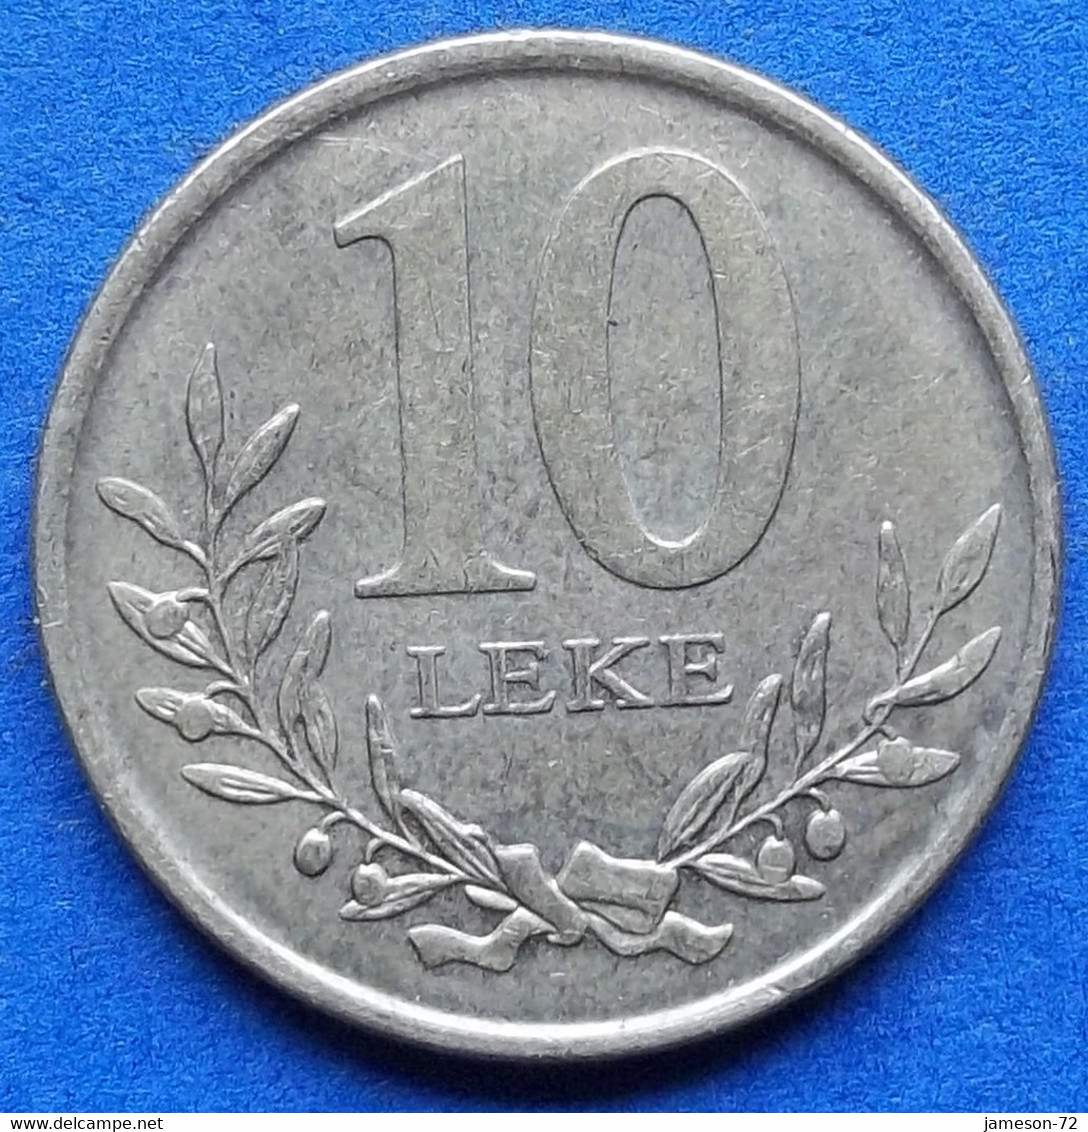 ALBANIA - 10 Leke 2013 "Berat Castle" KM# 77a Republic (1996) - Edelweiss Coins - Albania